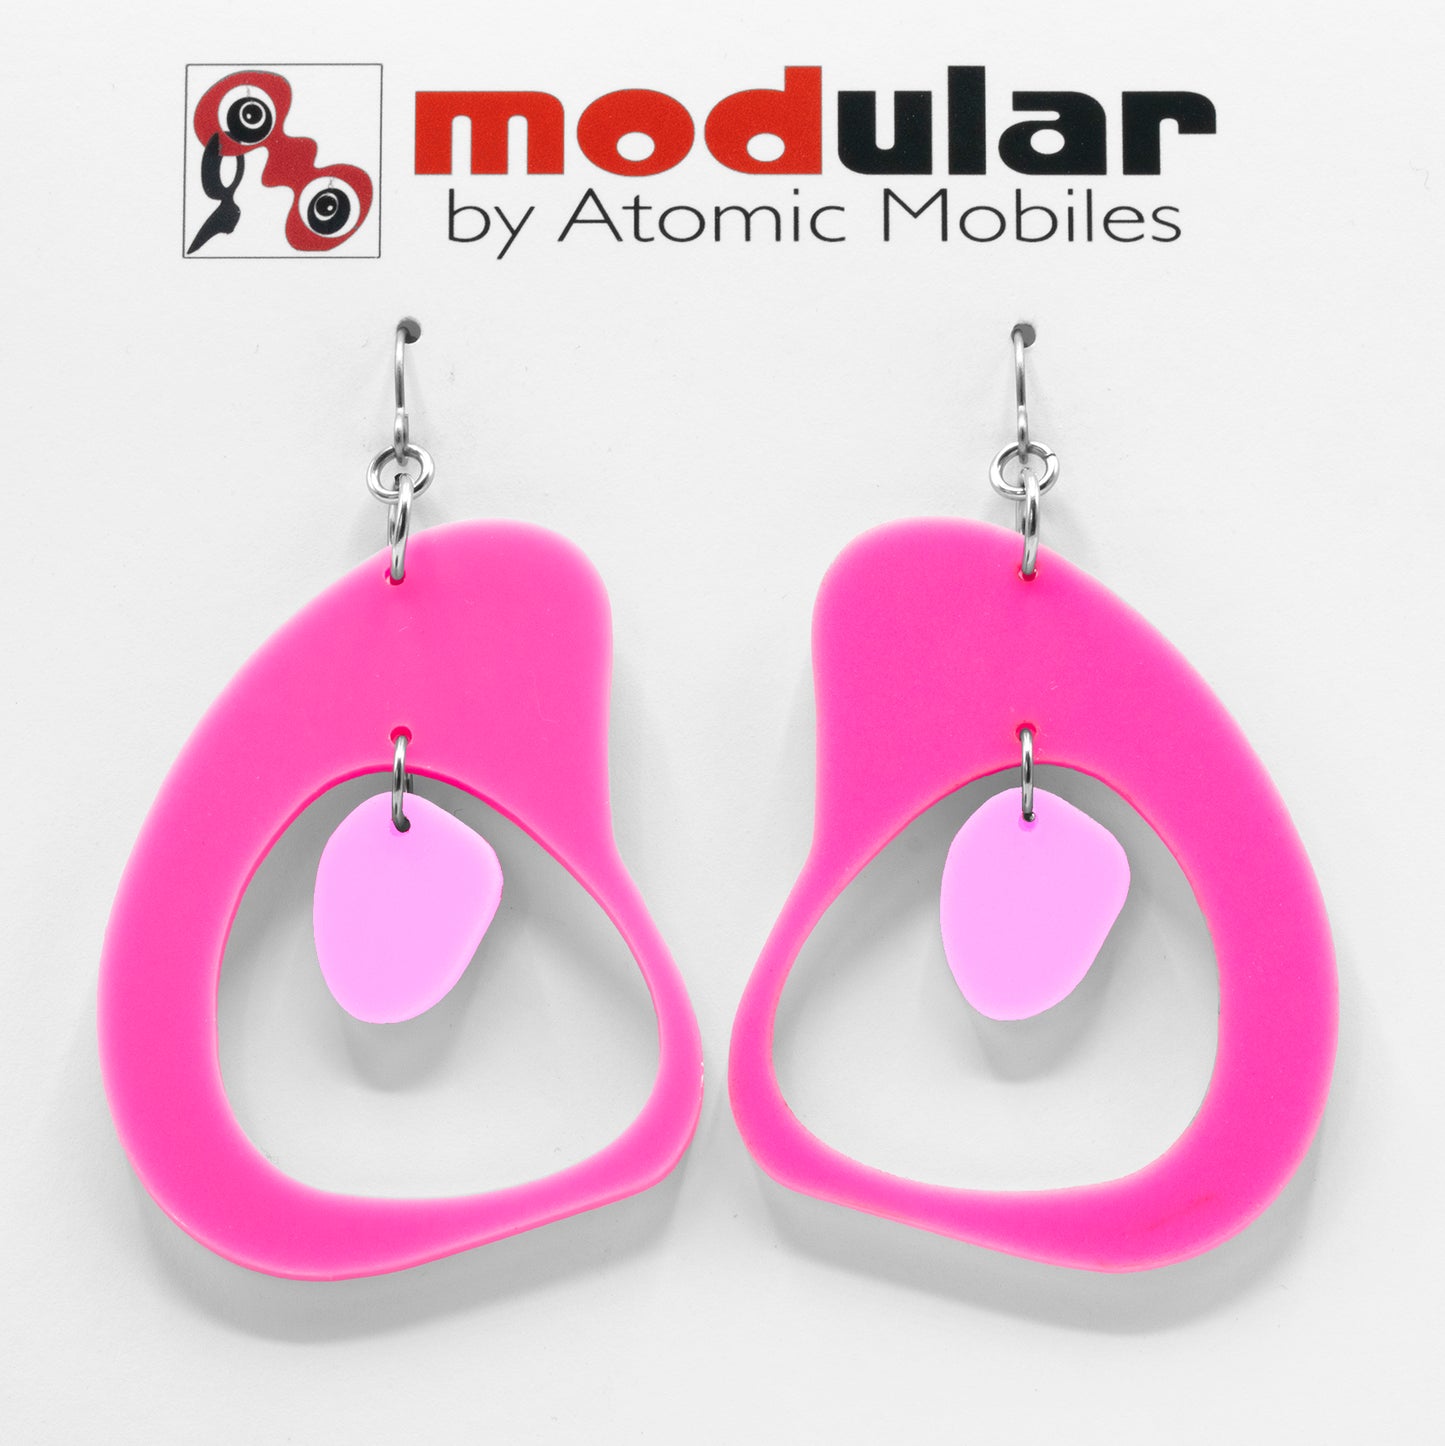 MODular Earrings - Boomerang Statement Earrings in Hot Pink by AtomicMobiles.com - retro era inspired mod handmade jewelry